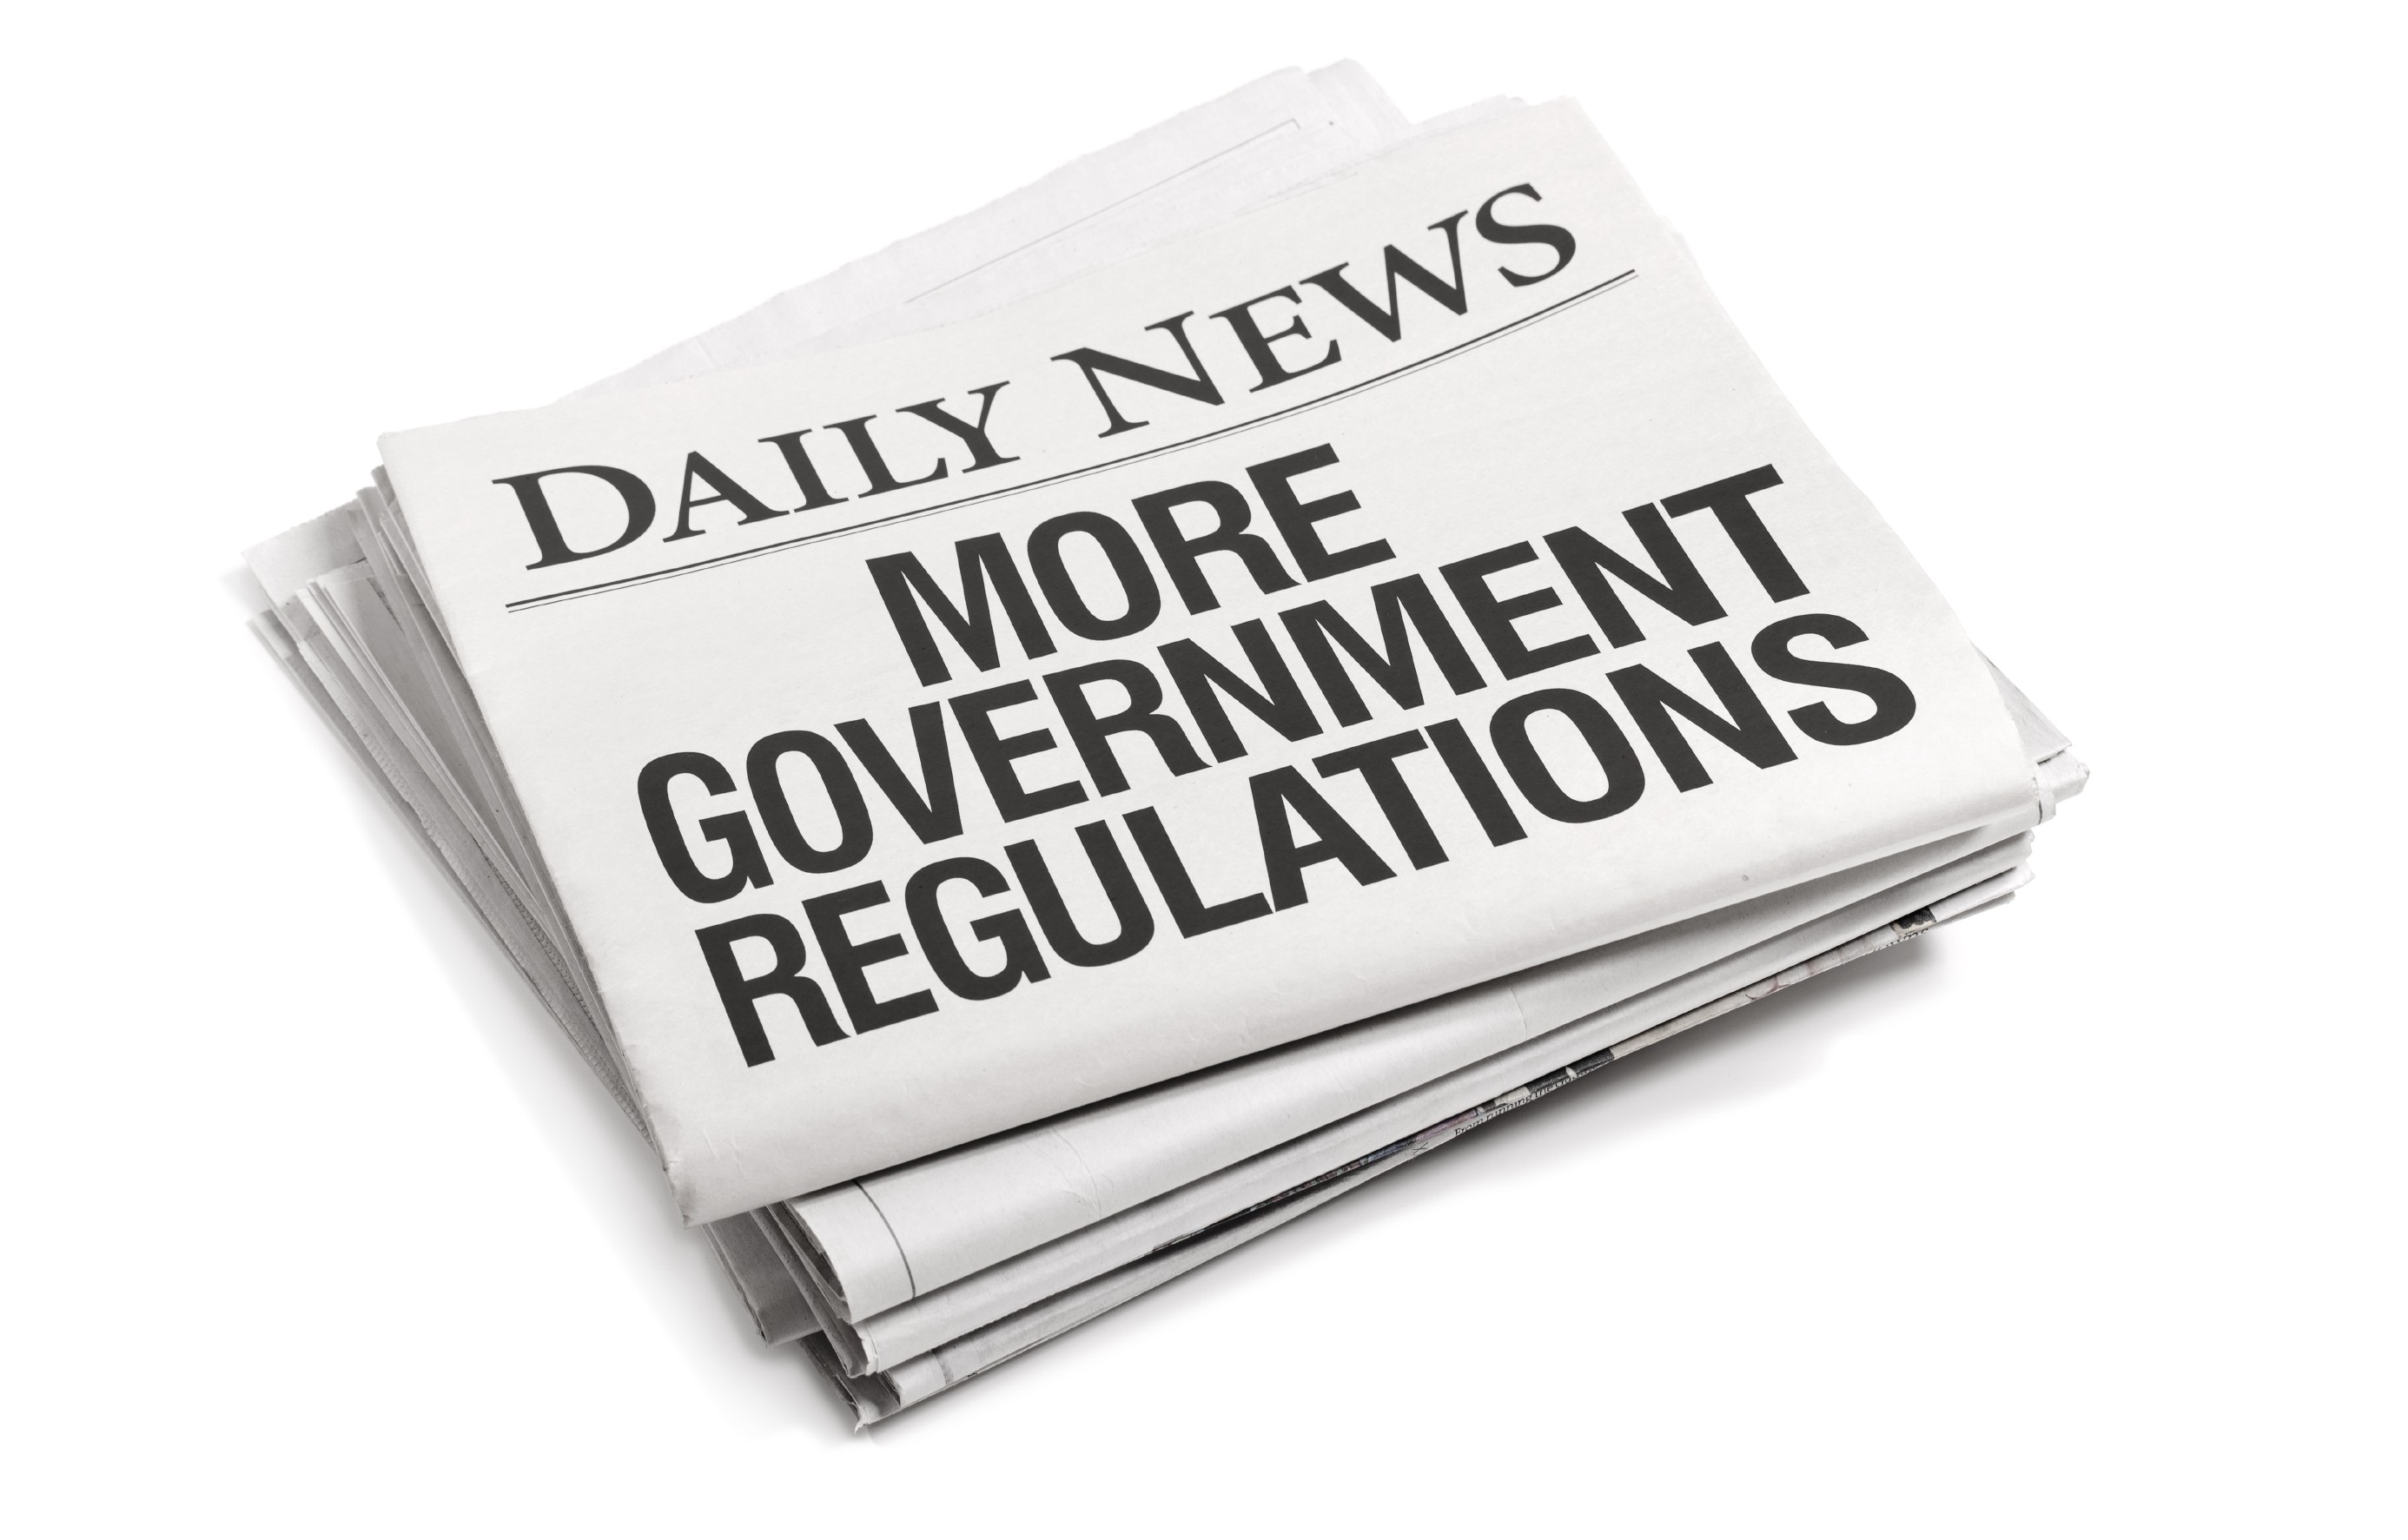 Banking regulations. Government Regulation. Governmental Regulation. Картинка Regulation. Government Regulation censor.